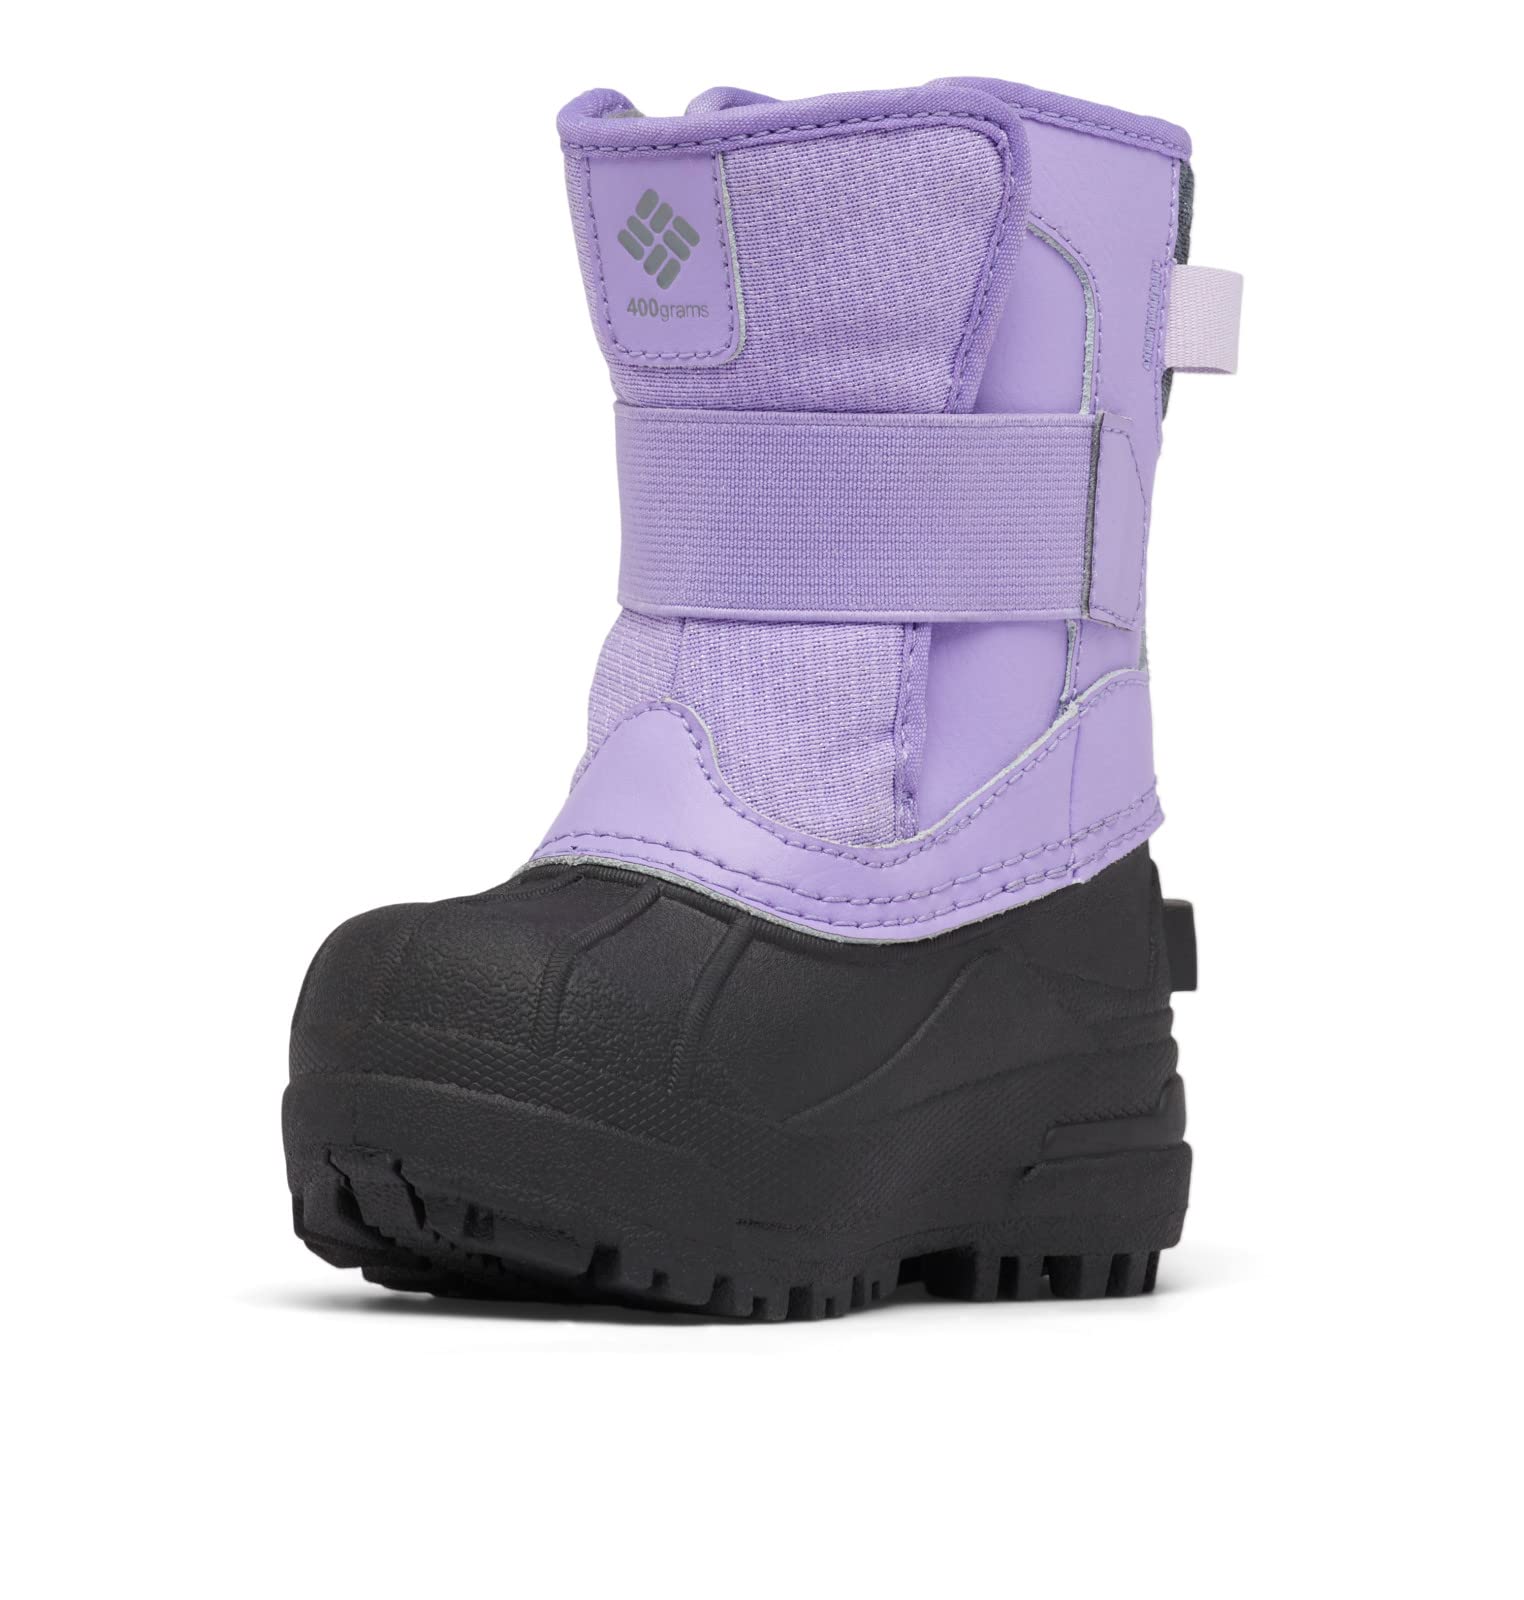 Columbia Unisex-Child Toddler Bugaboot Celsius Strap Snow Boot